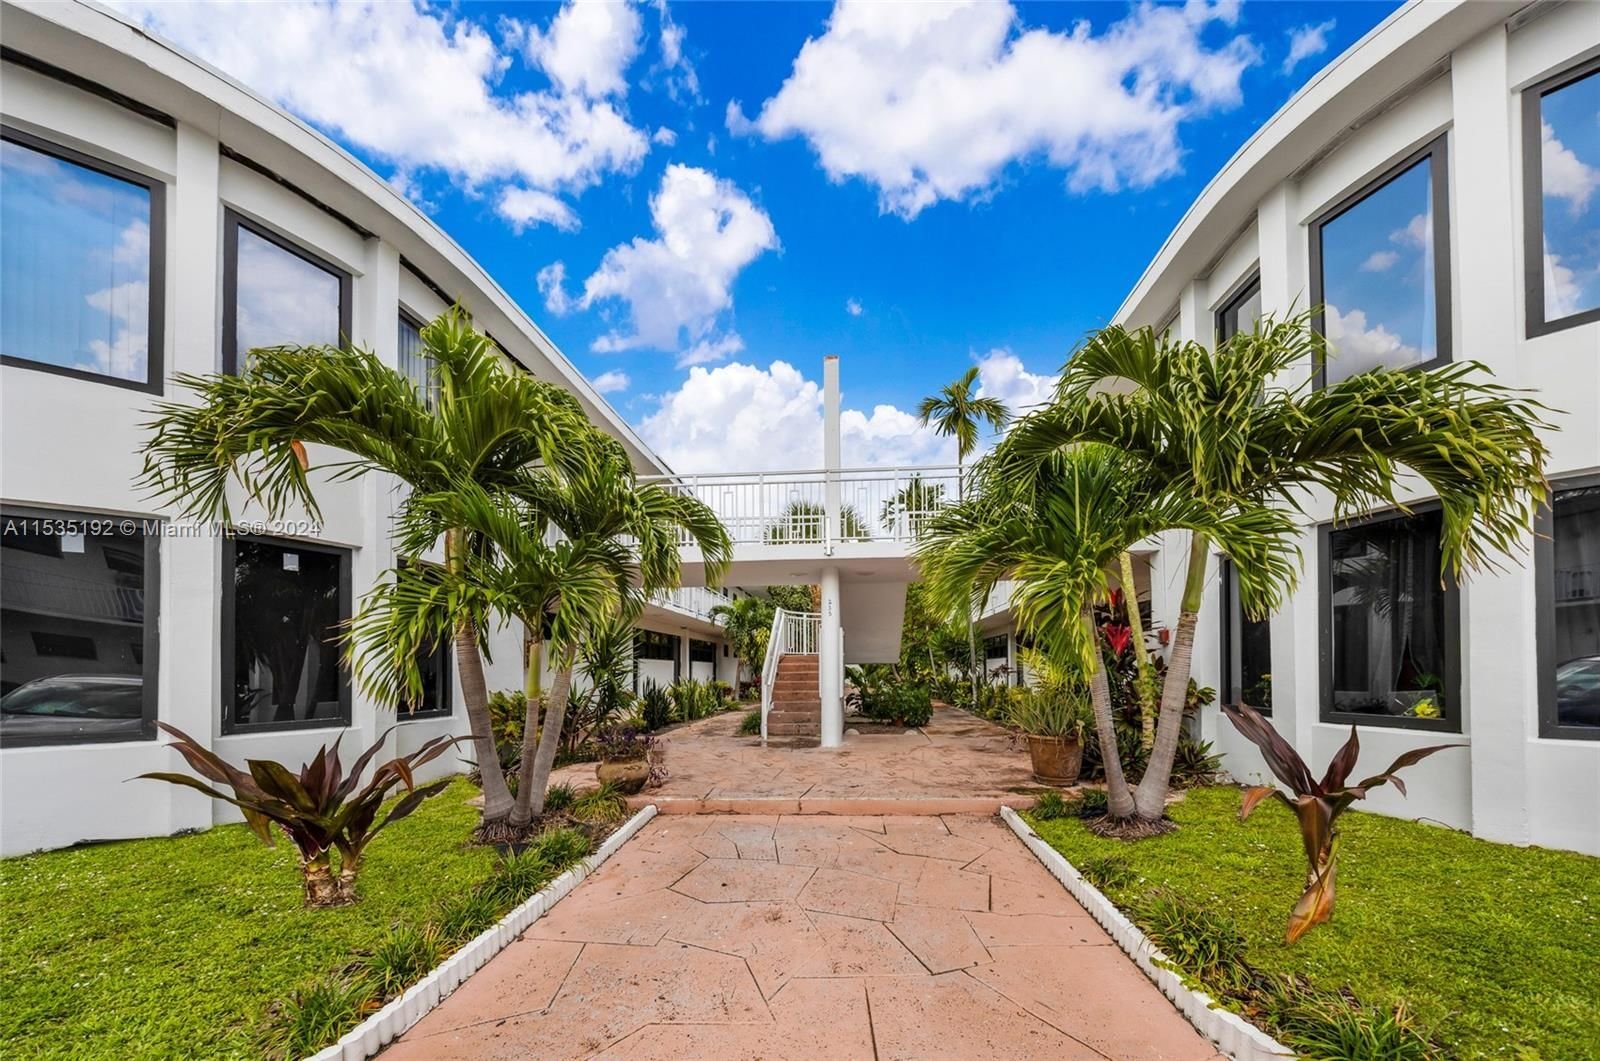 Real estate property located at 235 78th St, Miami-Dade County, Miami Beach, FL